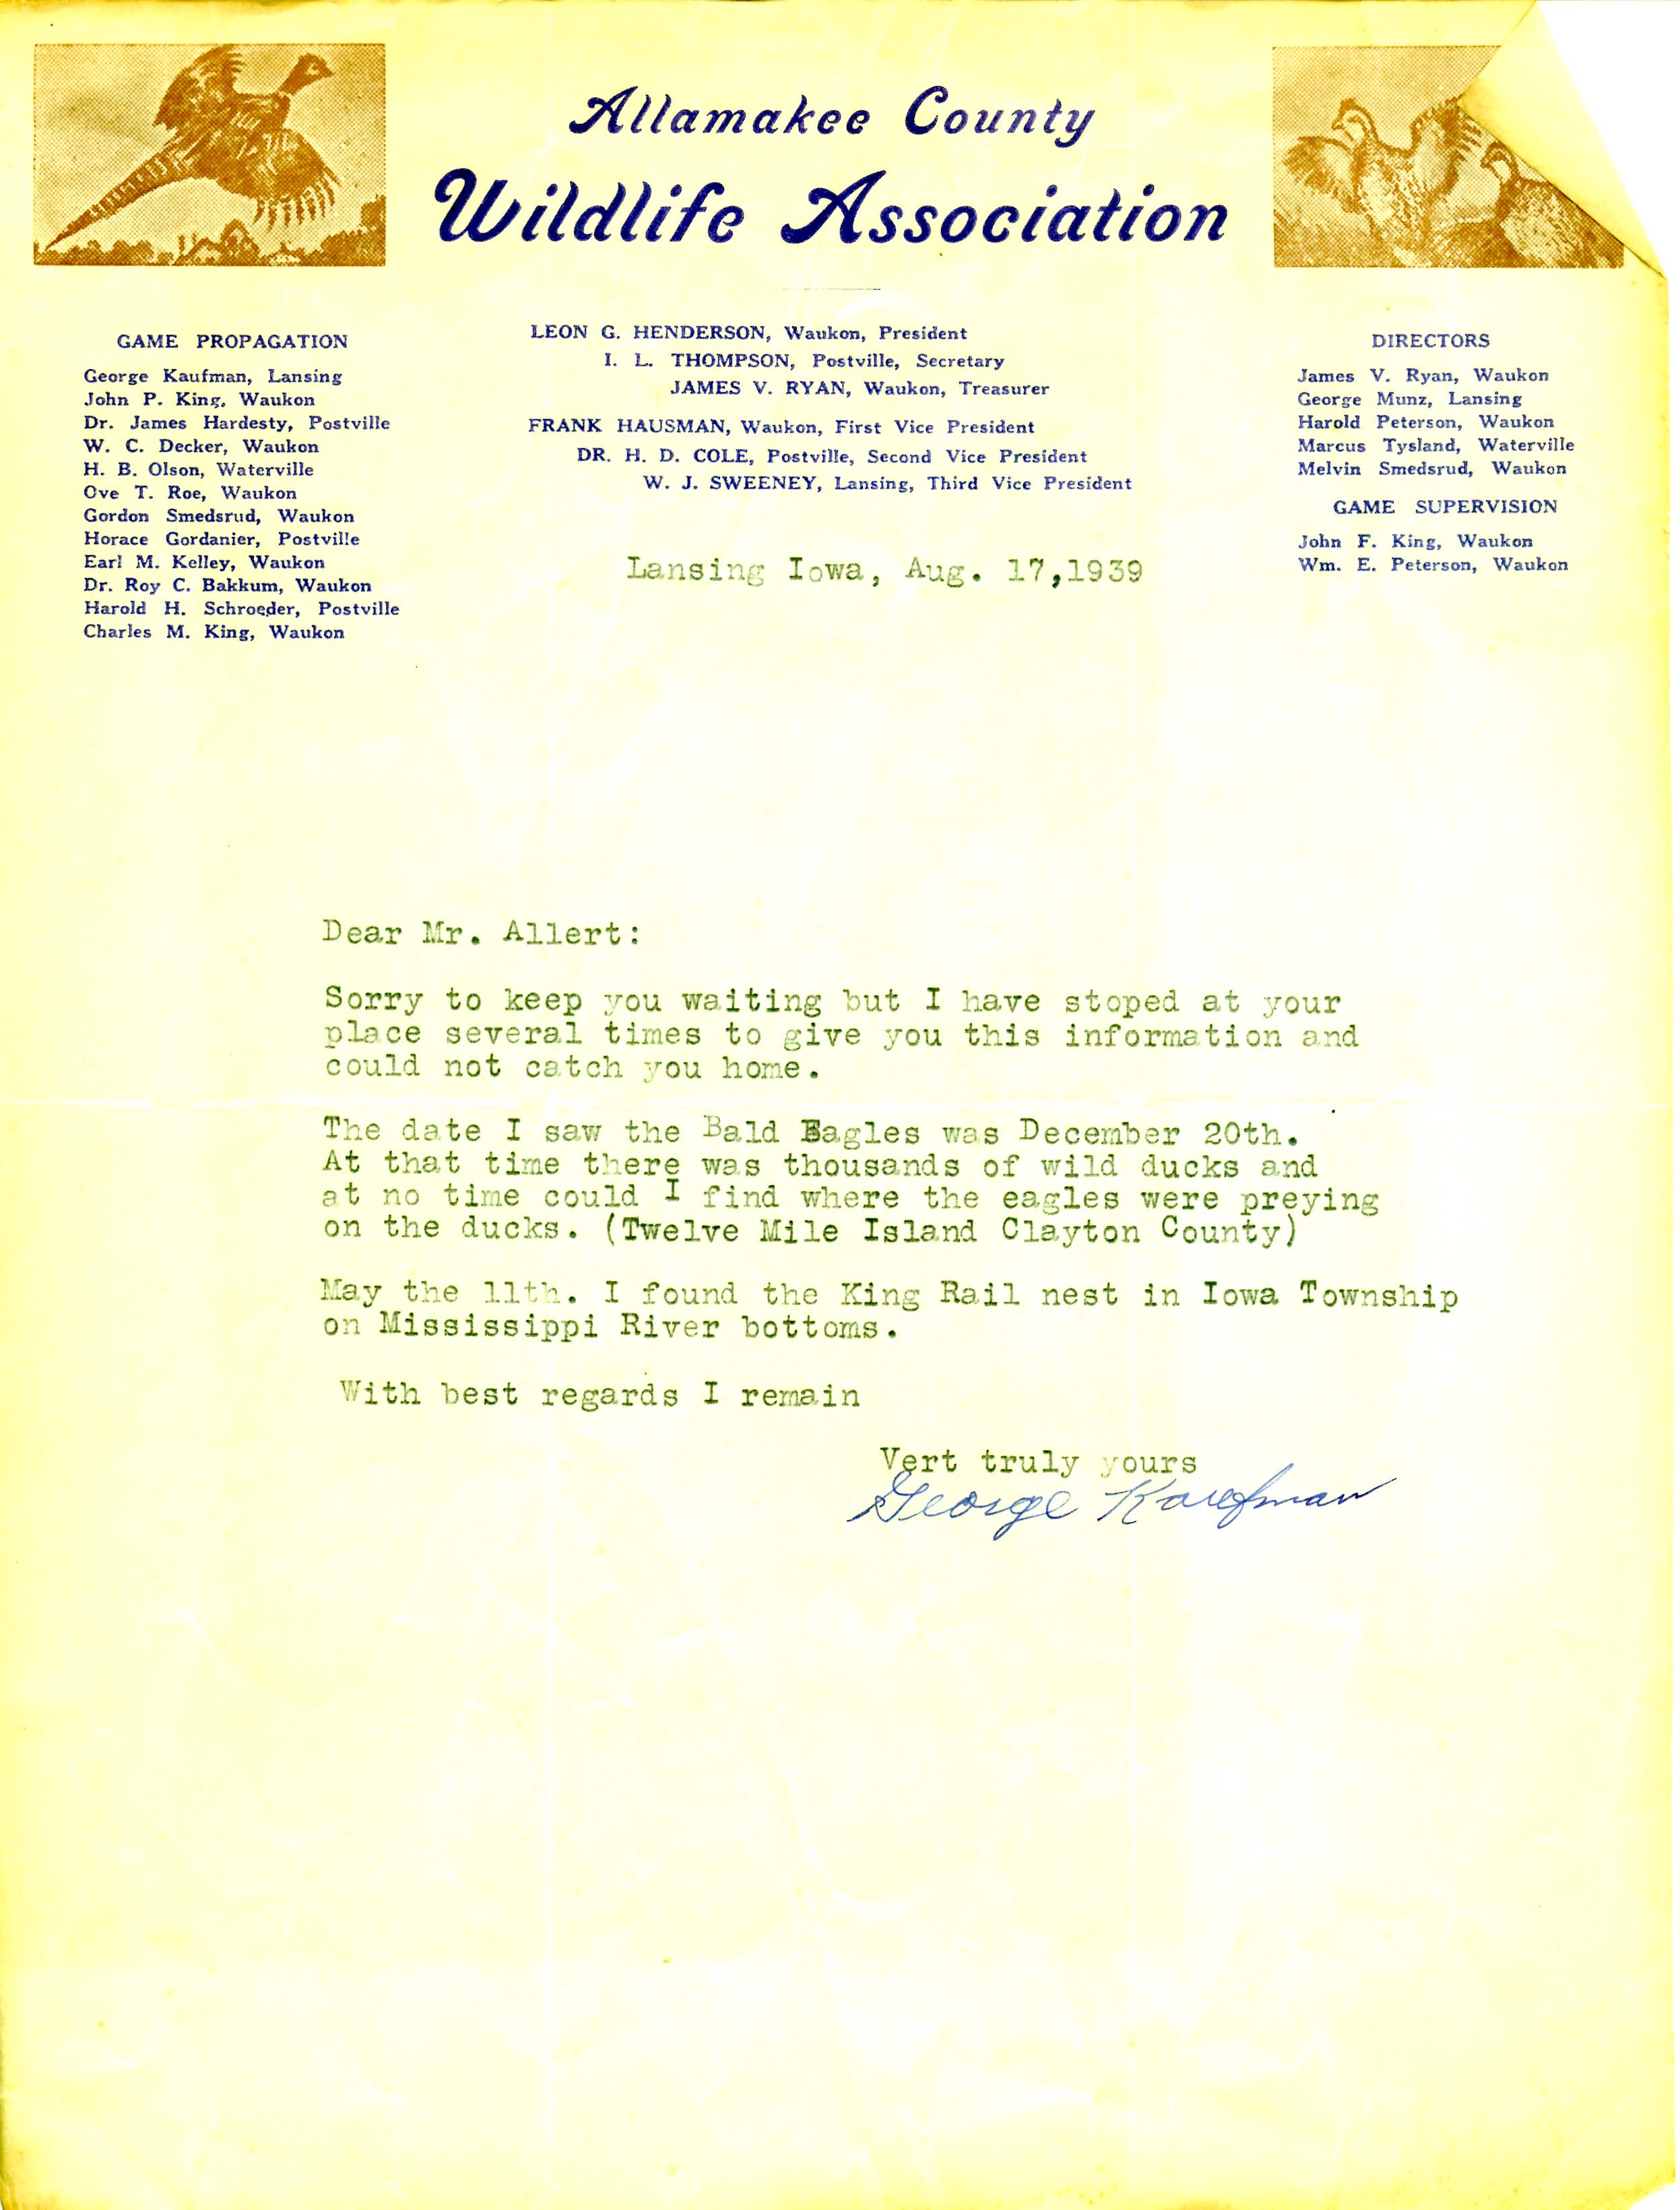 George Kaufman letter to Oscar Allert regarding Bald Eagle and King Rail sightings, August 17, 1939